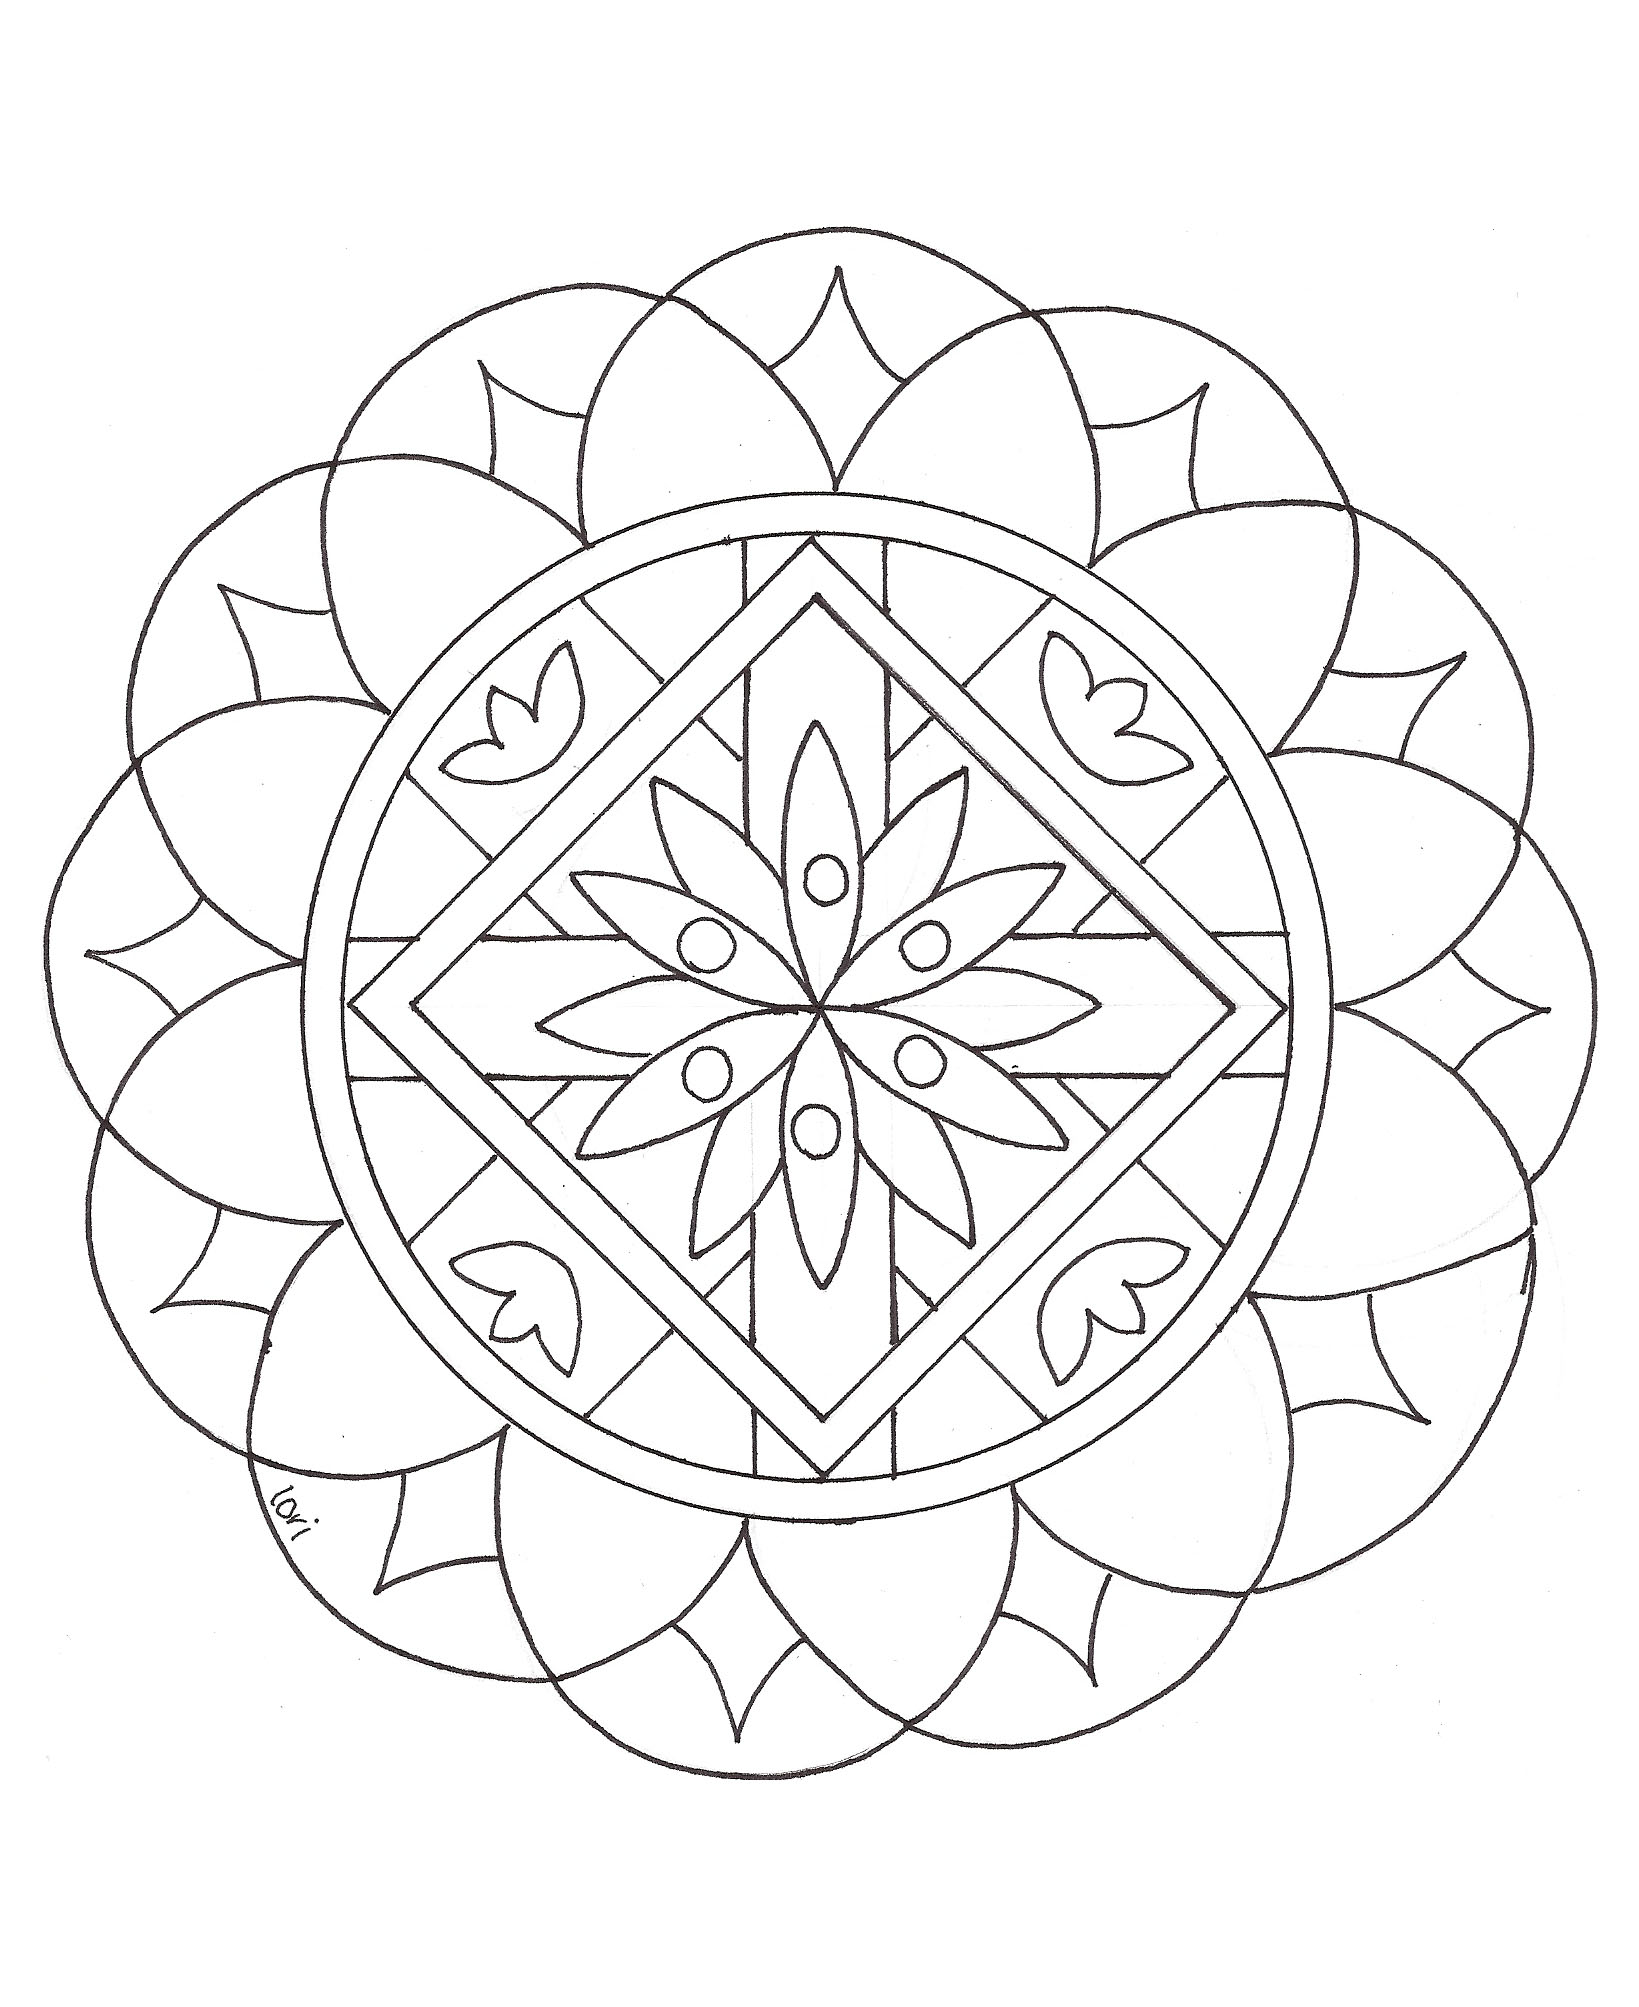 Simple mandala - 2 - Mandalas Coloring pages for kids to print & color